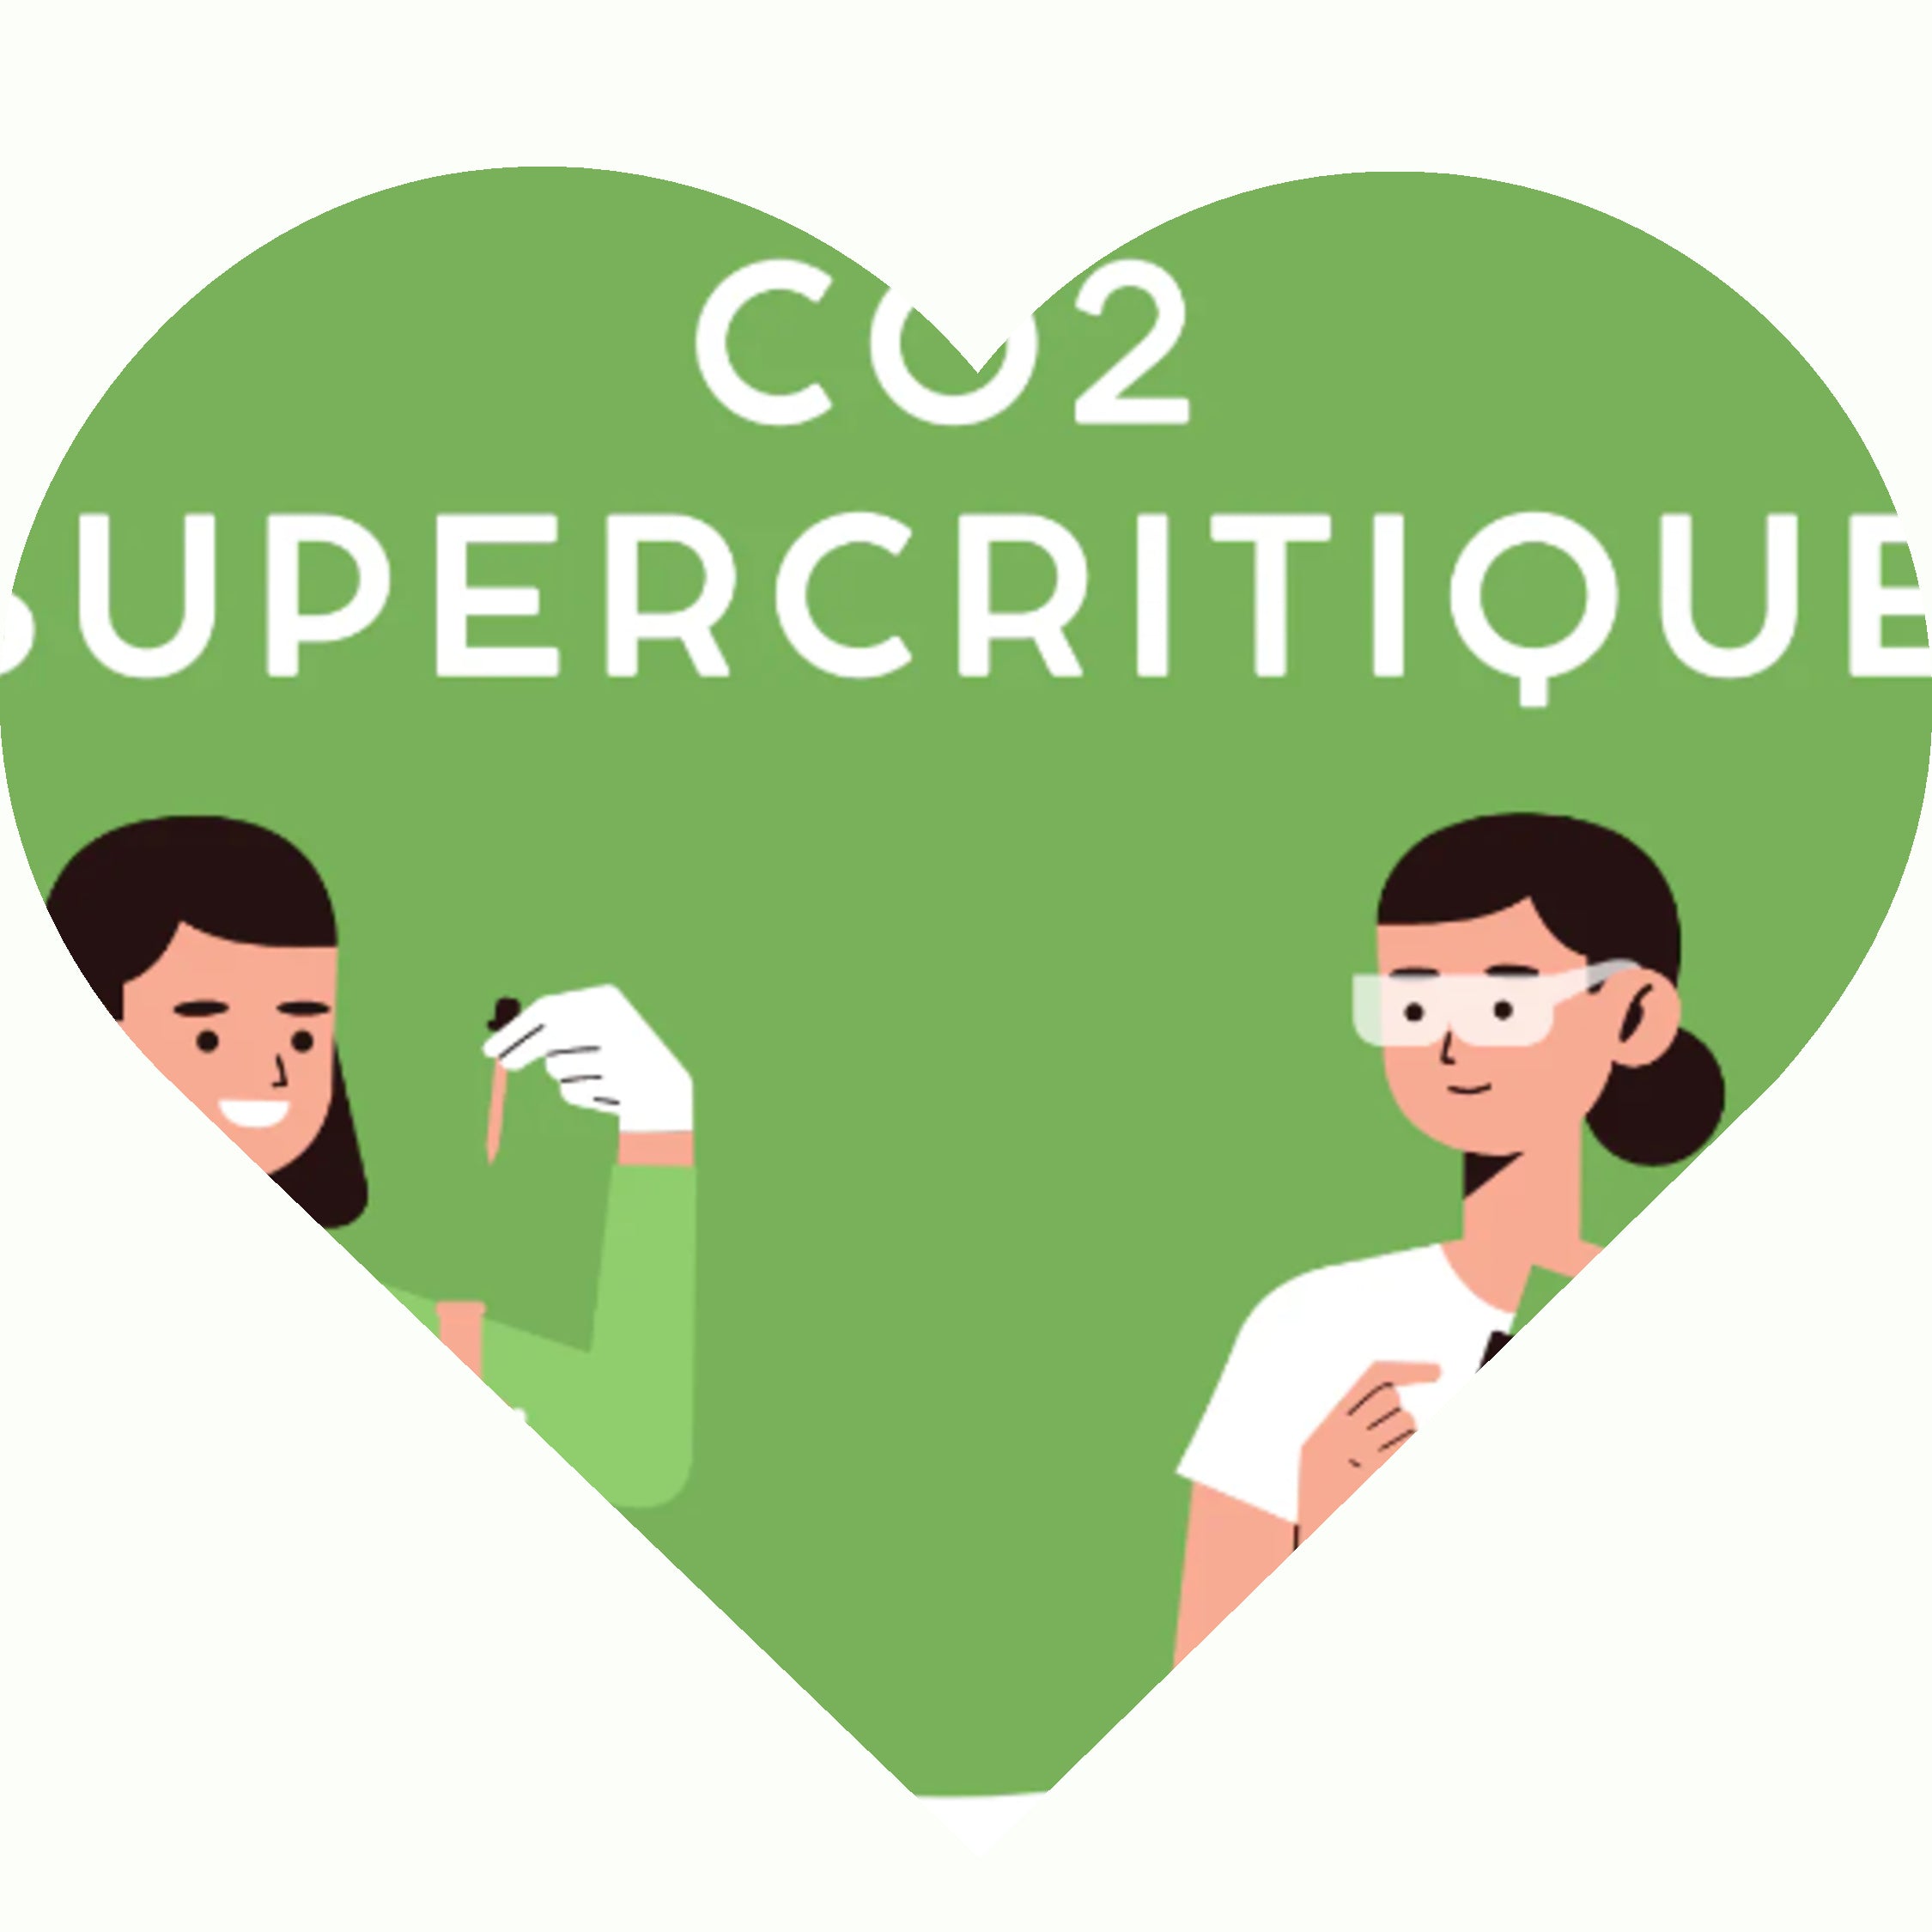 C02 supercritique